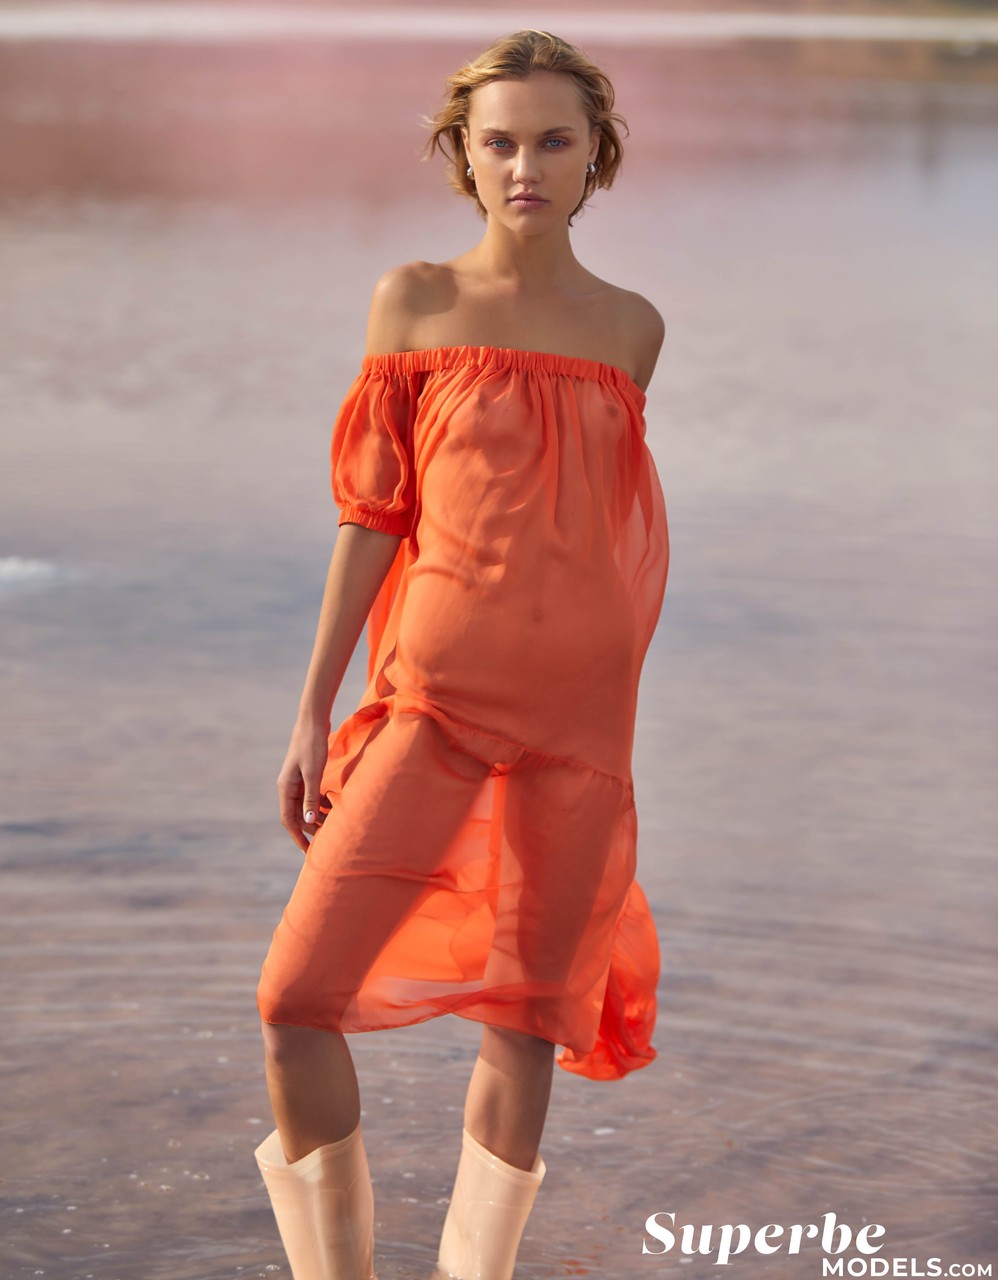 Adorable teen Hannah Ray doffs her see-through dress and poses on the beach порно фото #424011541 | Superbe Pics, Hannah Ray, Beach, мобильное порно